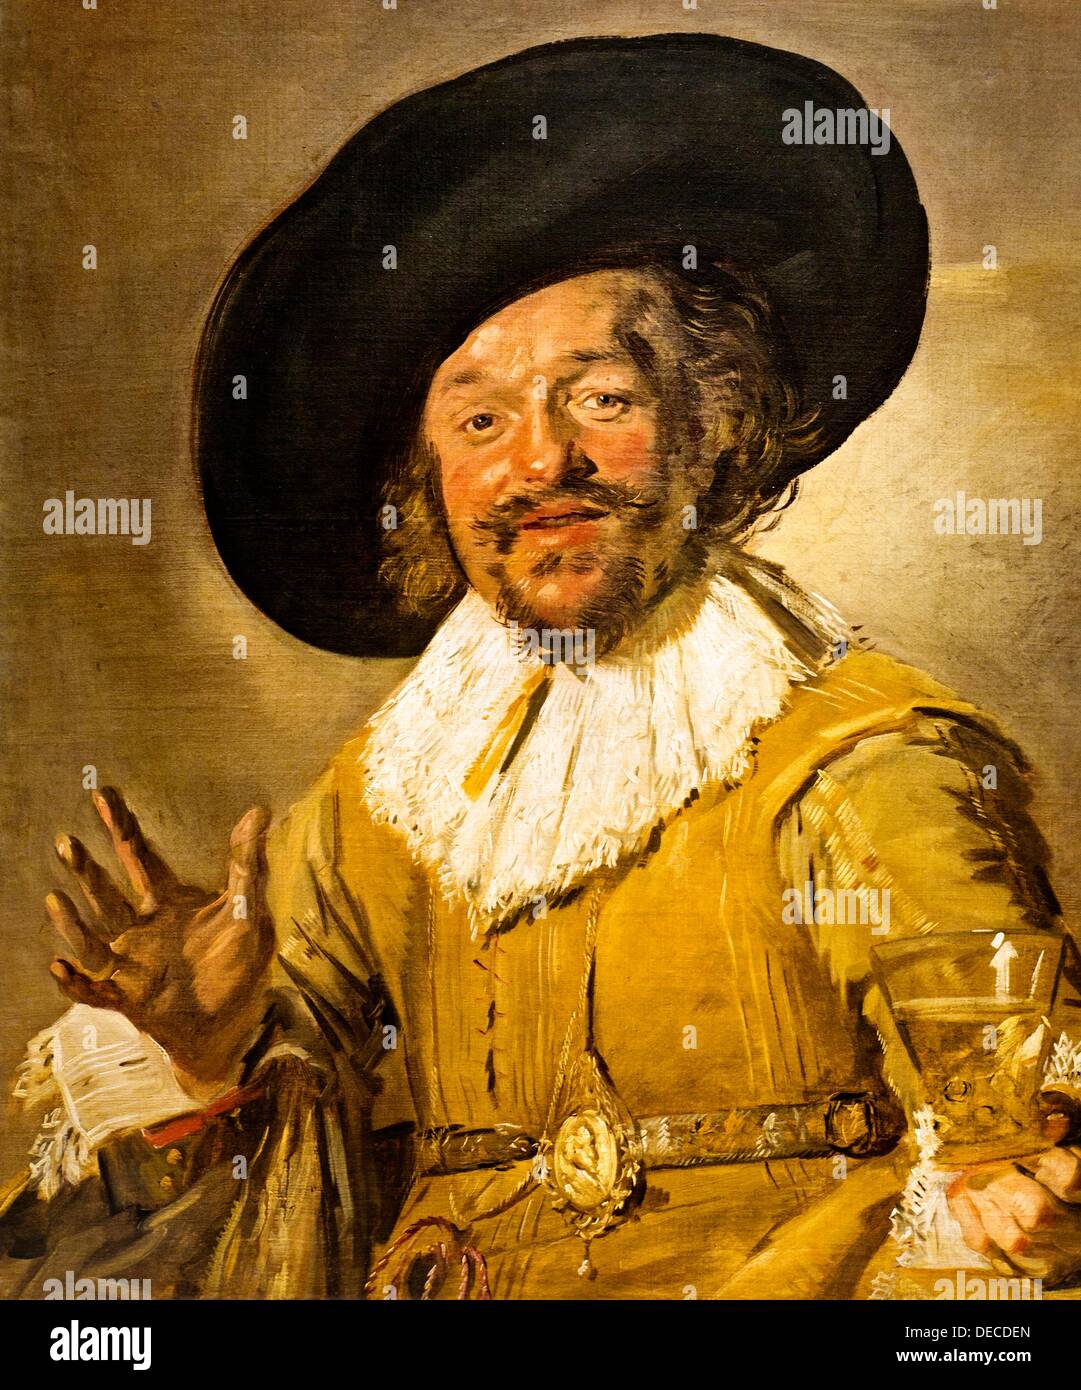 The Merry Drinker, oil on canvas, 1628-1630, Frans Hals  Rijksmuseum, Rijks museum, Amsterdam, Netherlands. Stock Photo